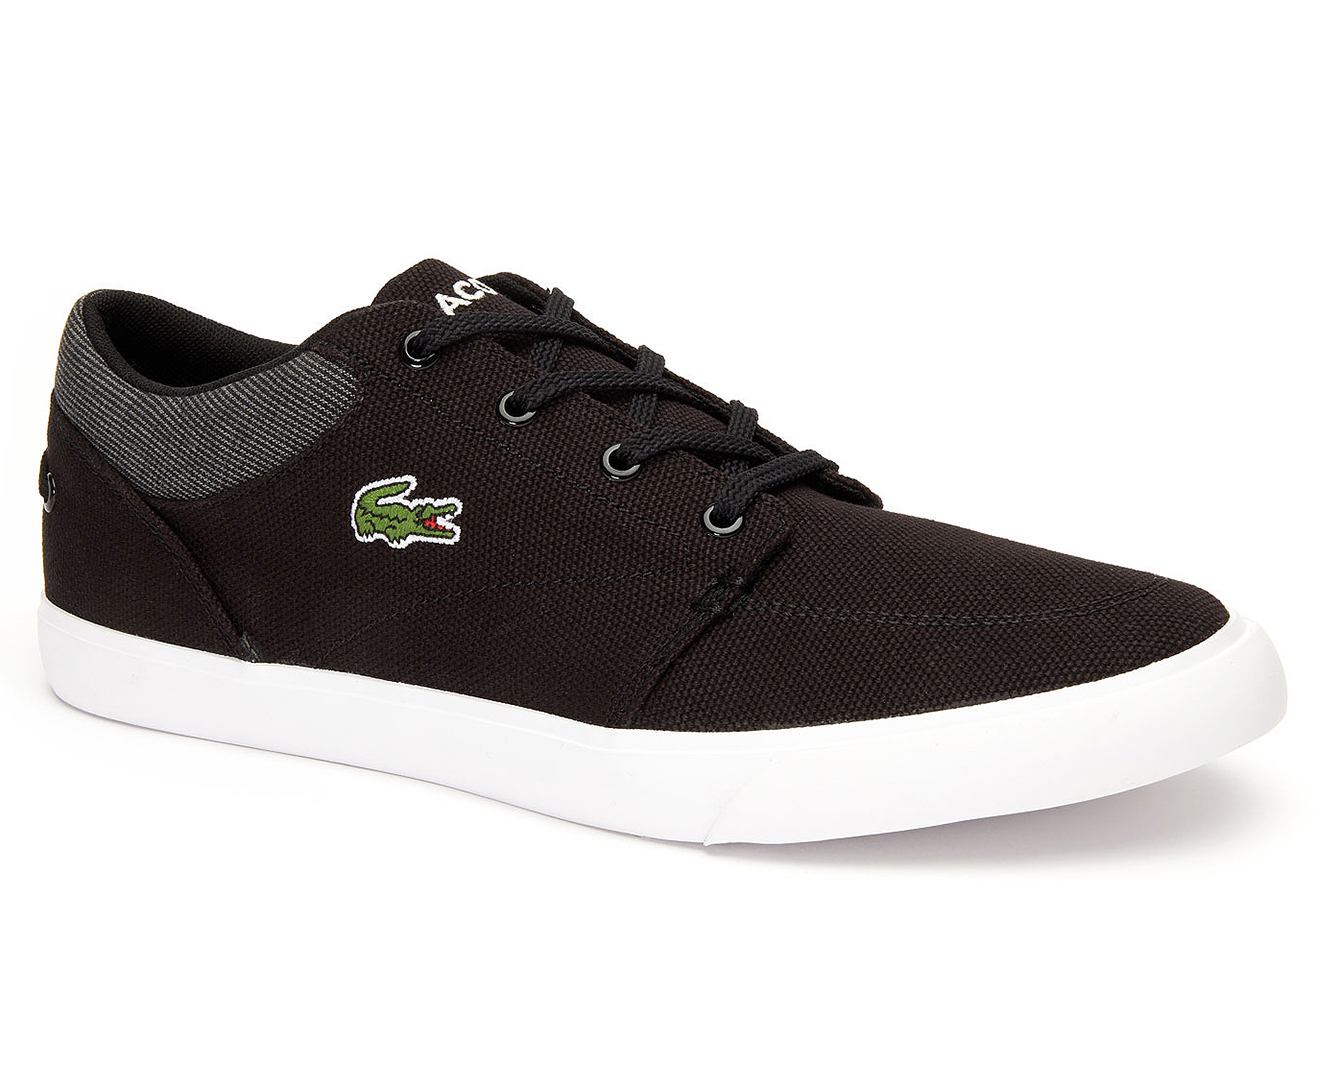 Lacoste Men's Bayliss 319 1 Sneakers - Black/White | Catch.com.au